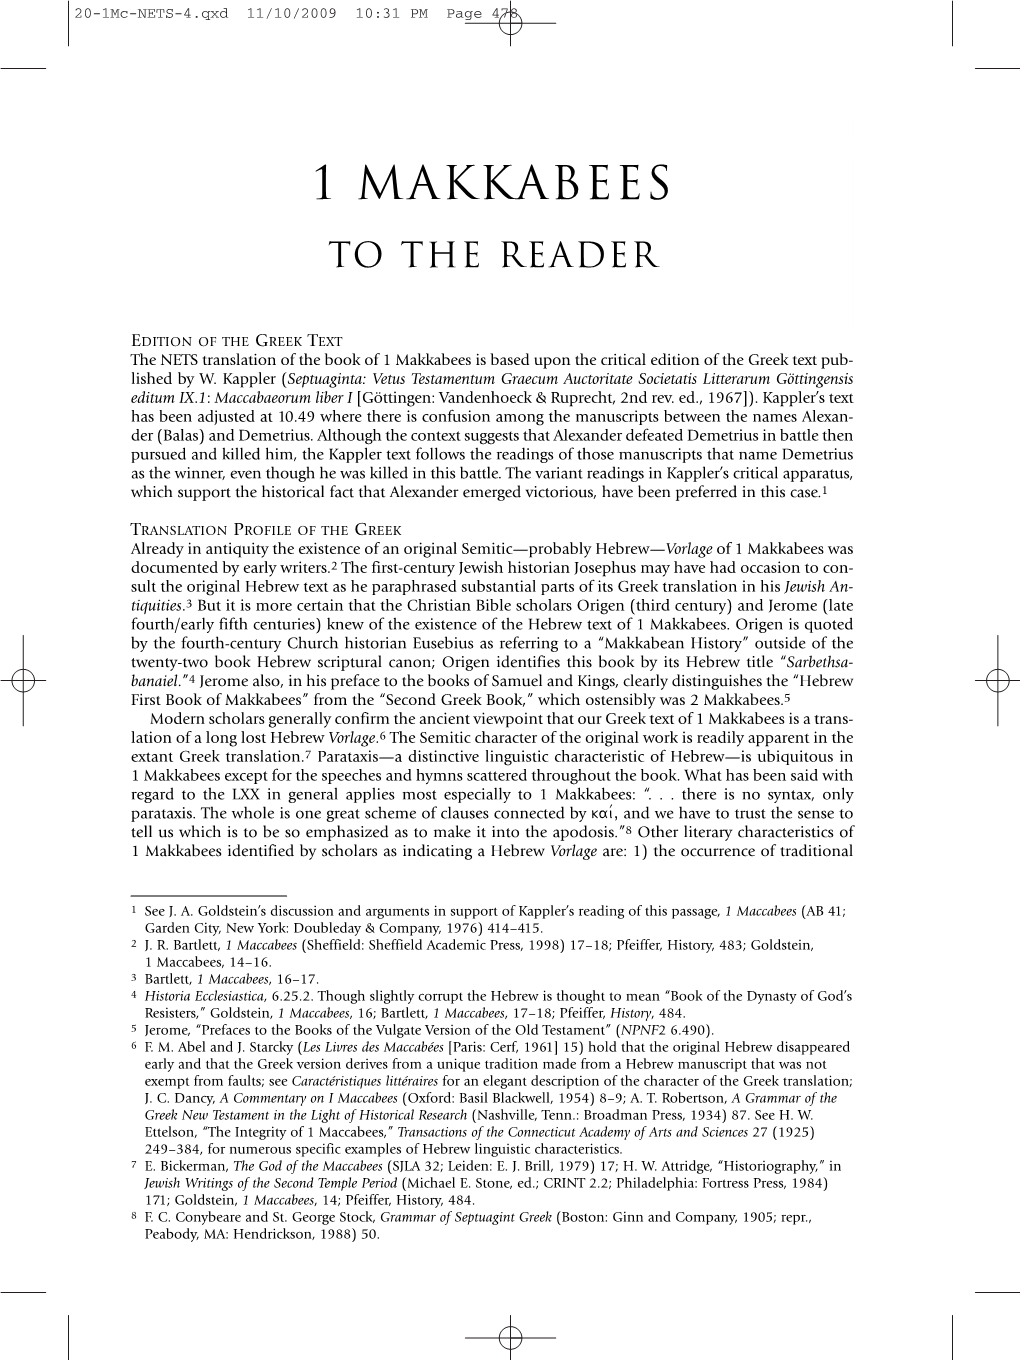 A New English Translation of the Septuagint. 20 1 Makkabees